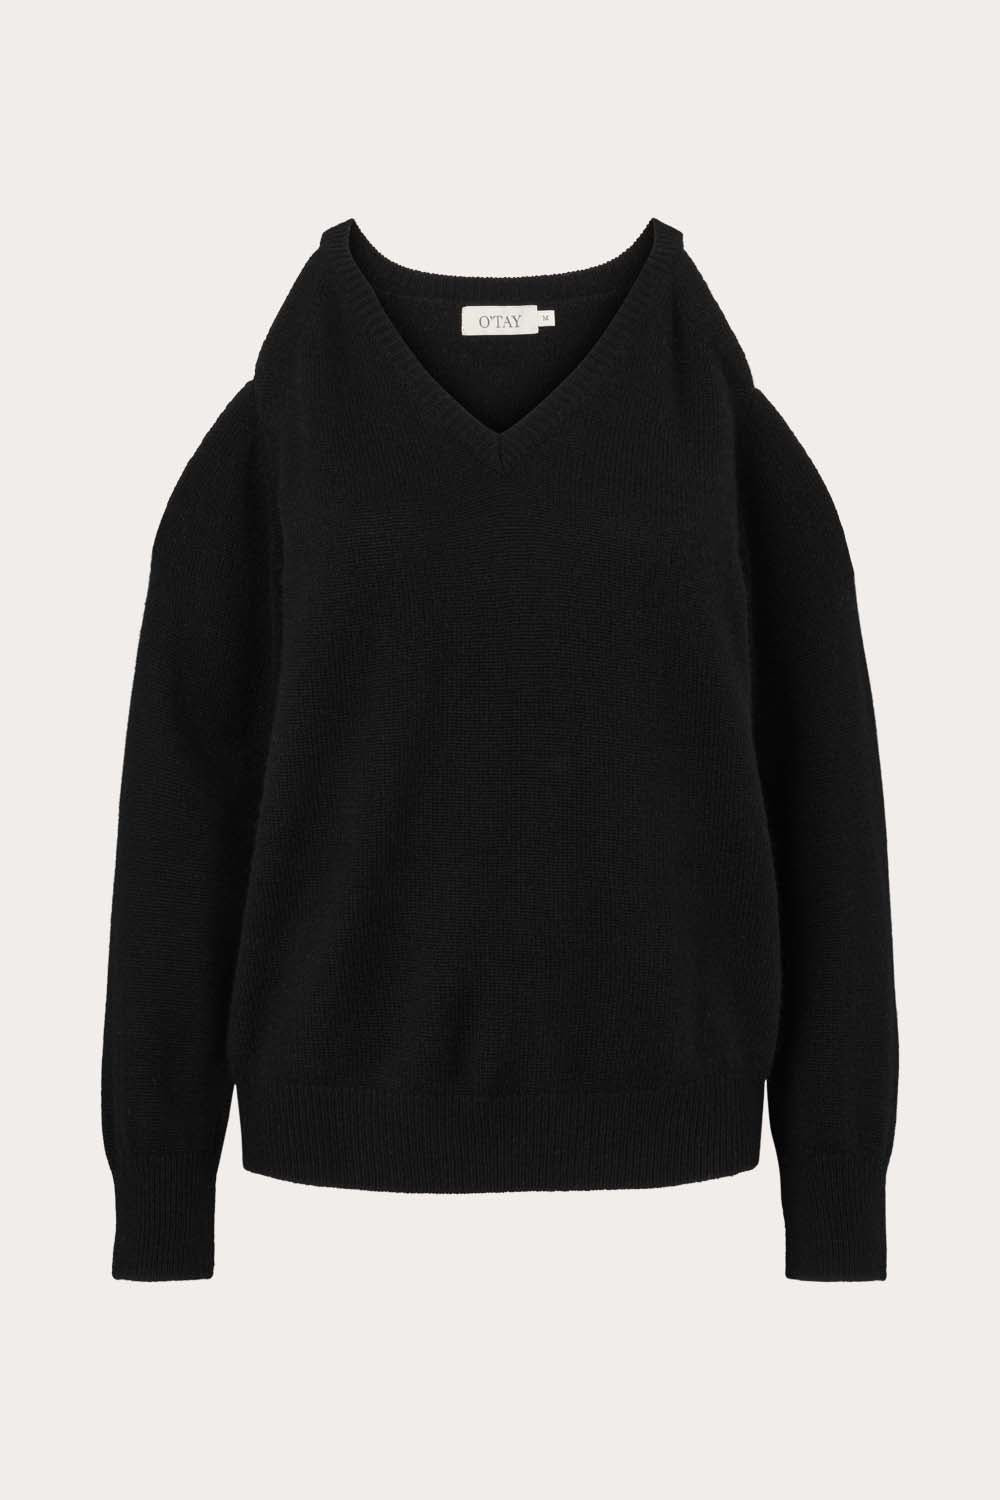 O'TAY Davina Sweater Bluser Black